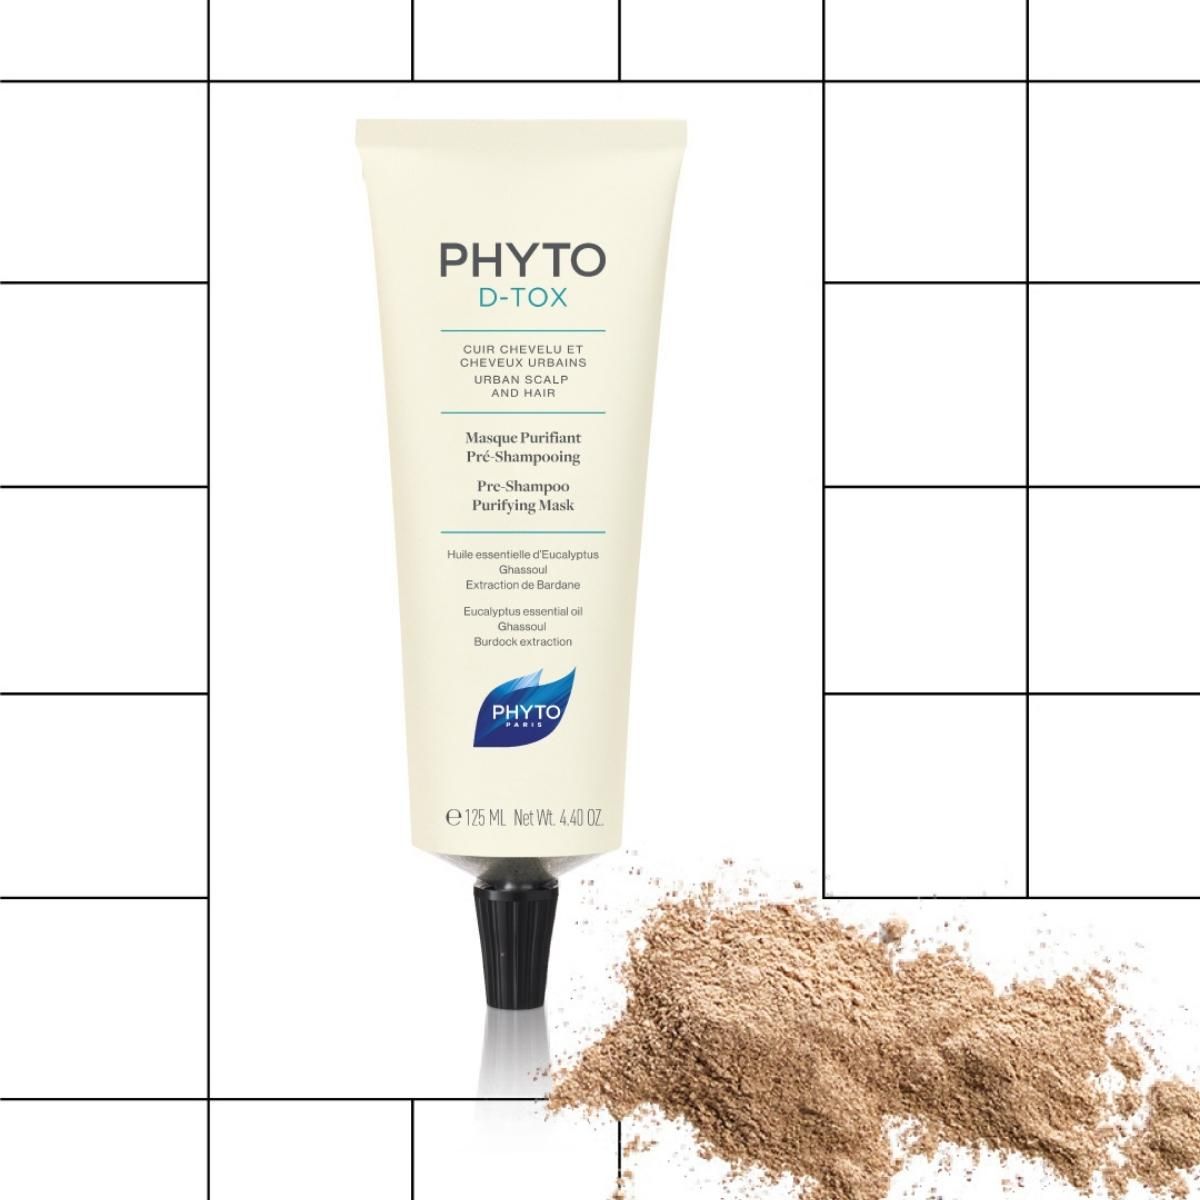 PHYTOD-TOX Pre-Shampoo Purifying Mask